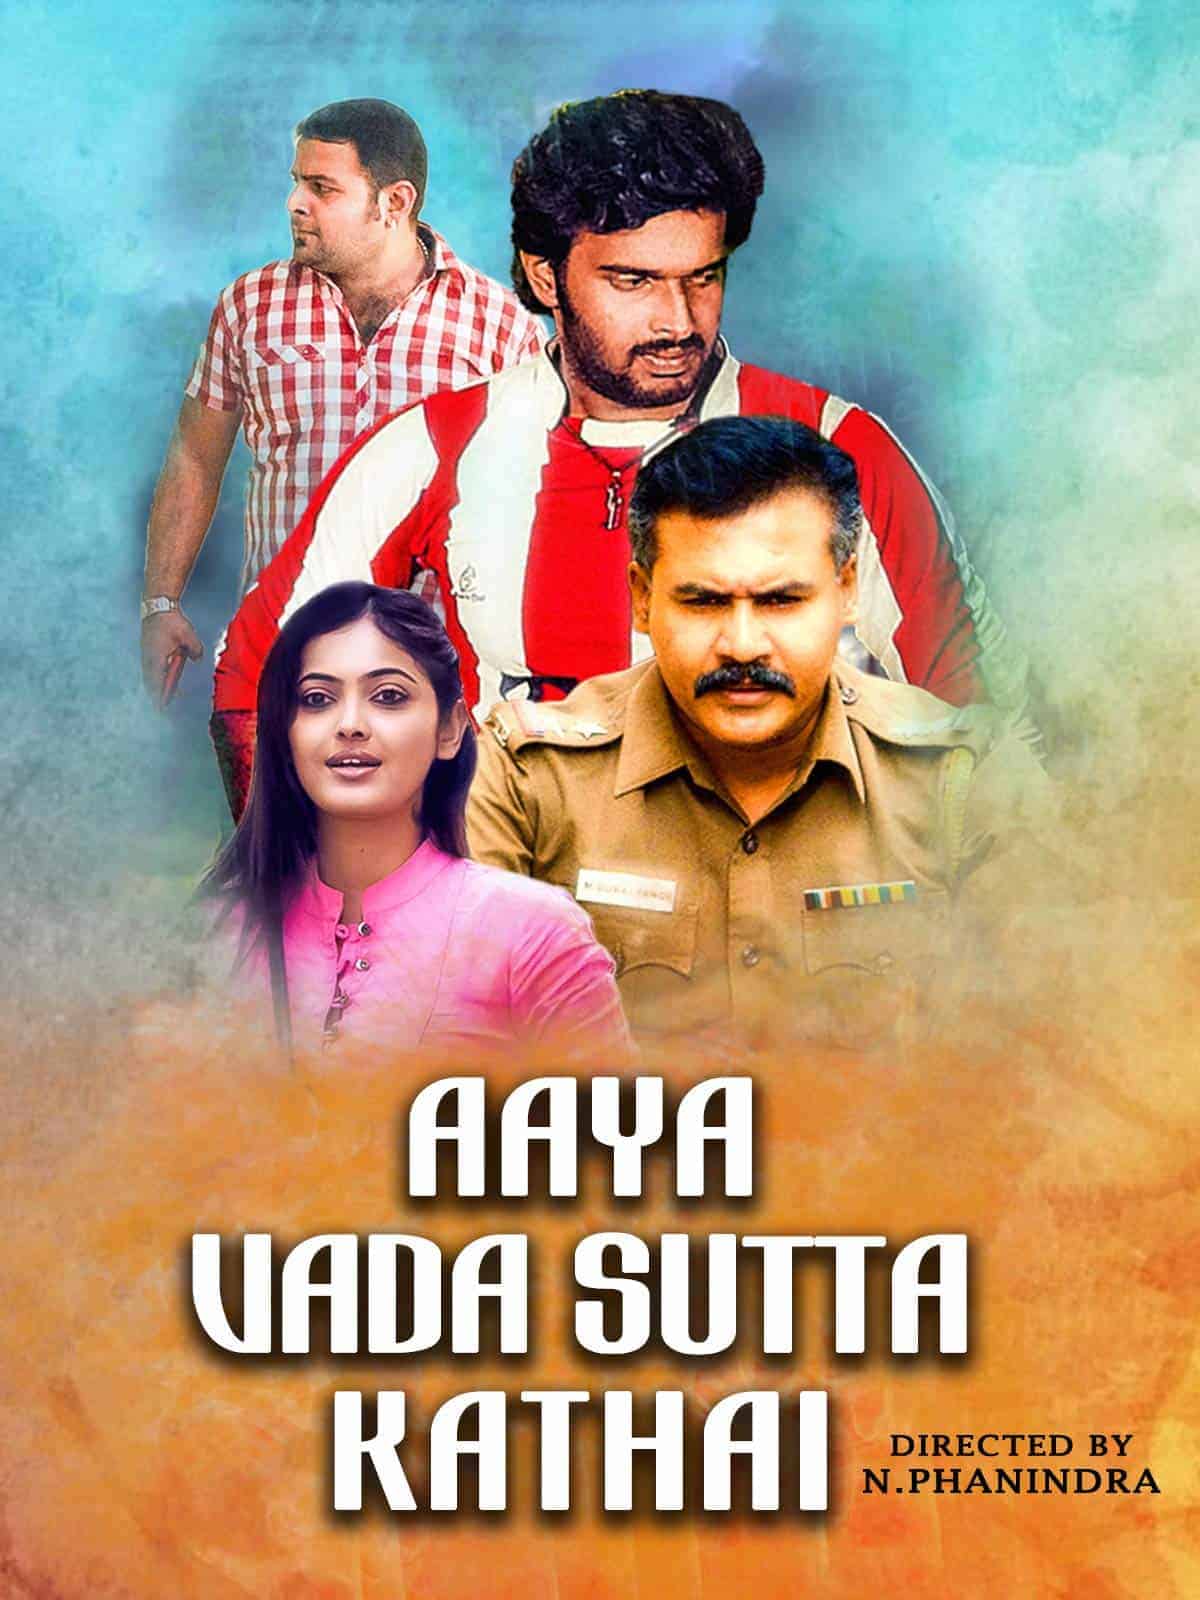 Aaya Vada Sutta Kathai 2015 Tamil Comedy Movie Online